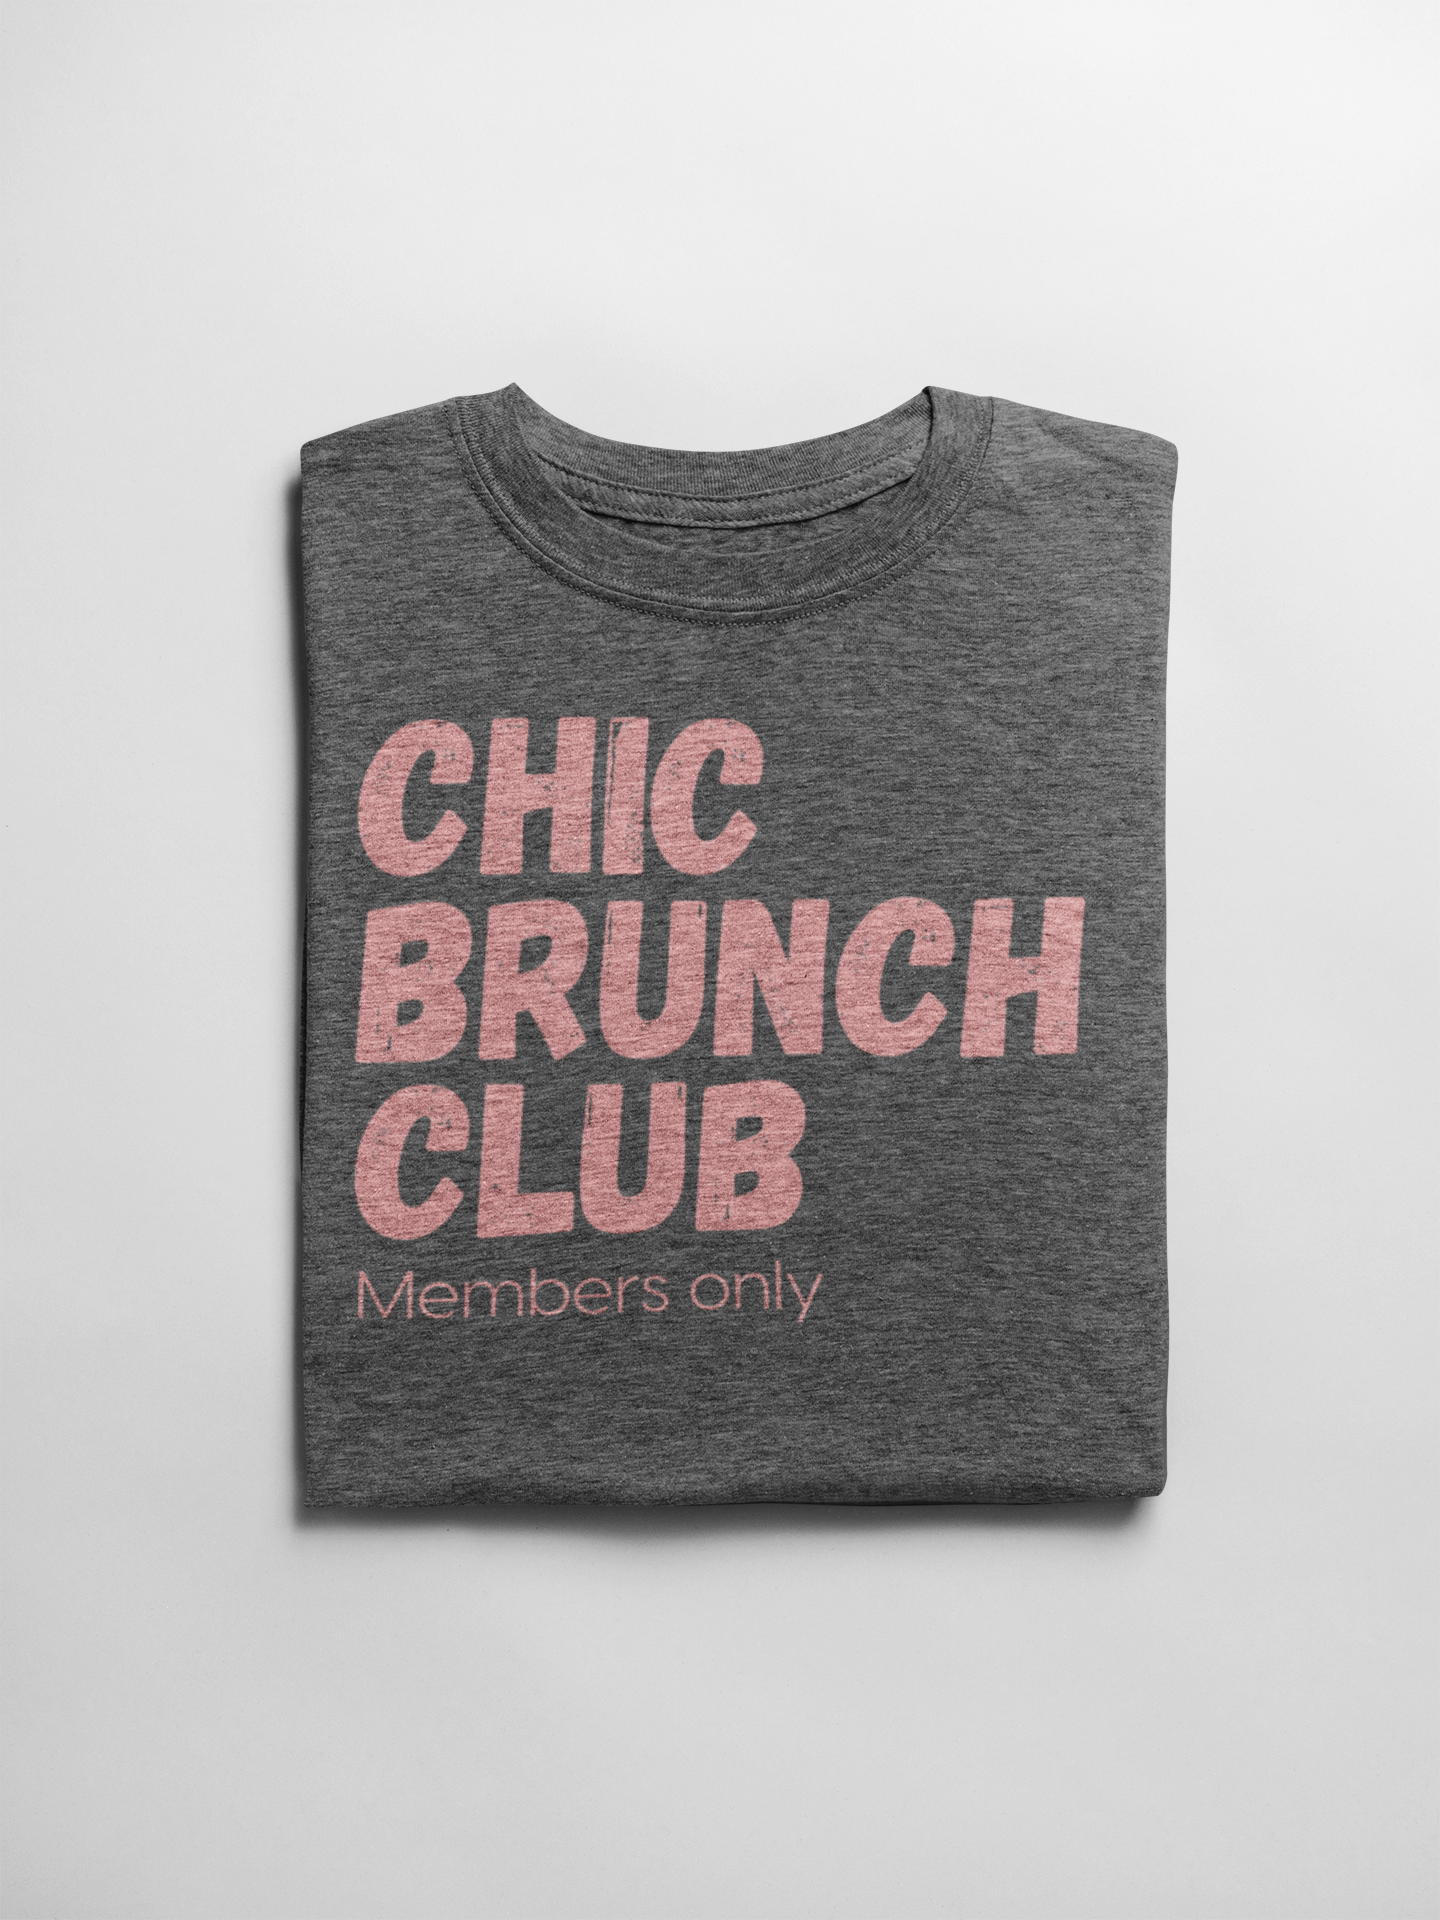 Chic Brunch Club Tee